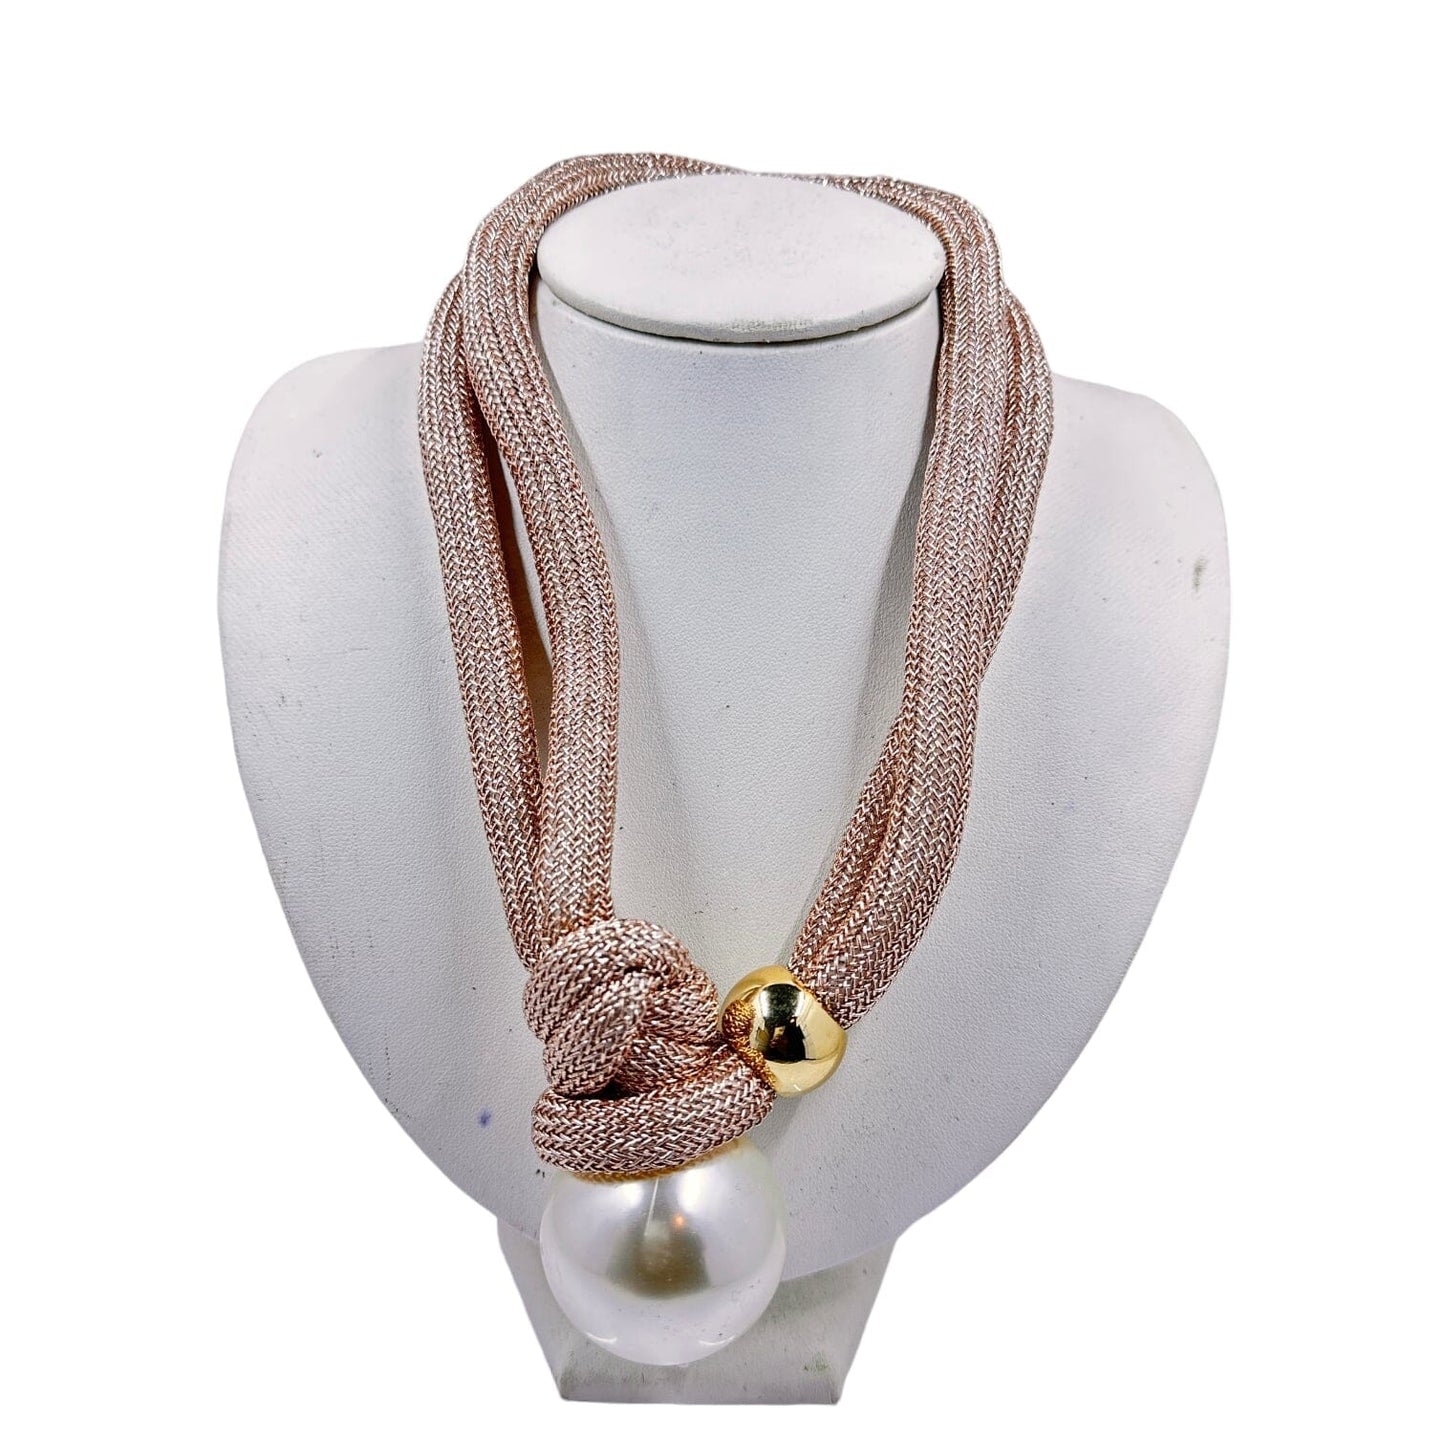 Handmade Unique Adjustable Rope Necklace with Big Pearl Necklaces Trendzio Rose Gold 